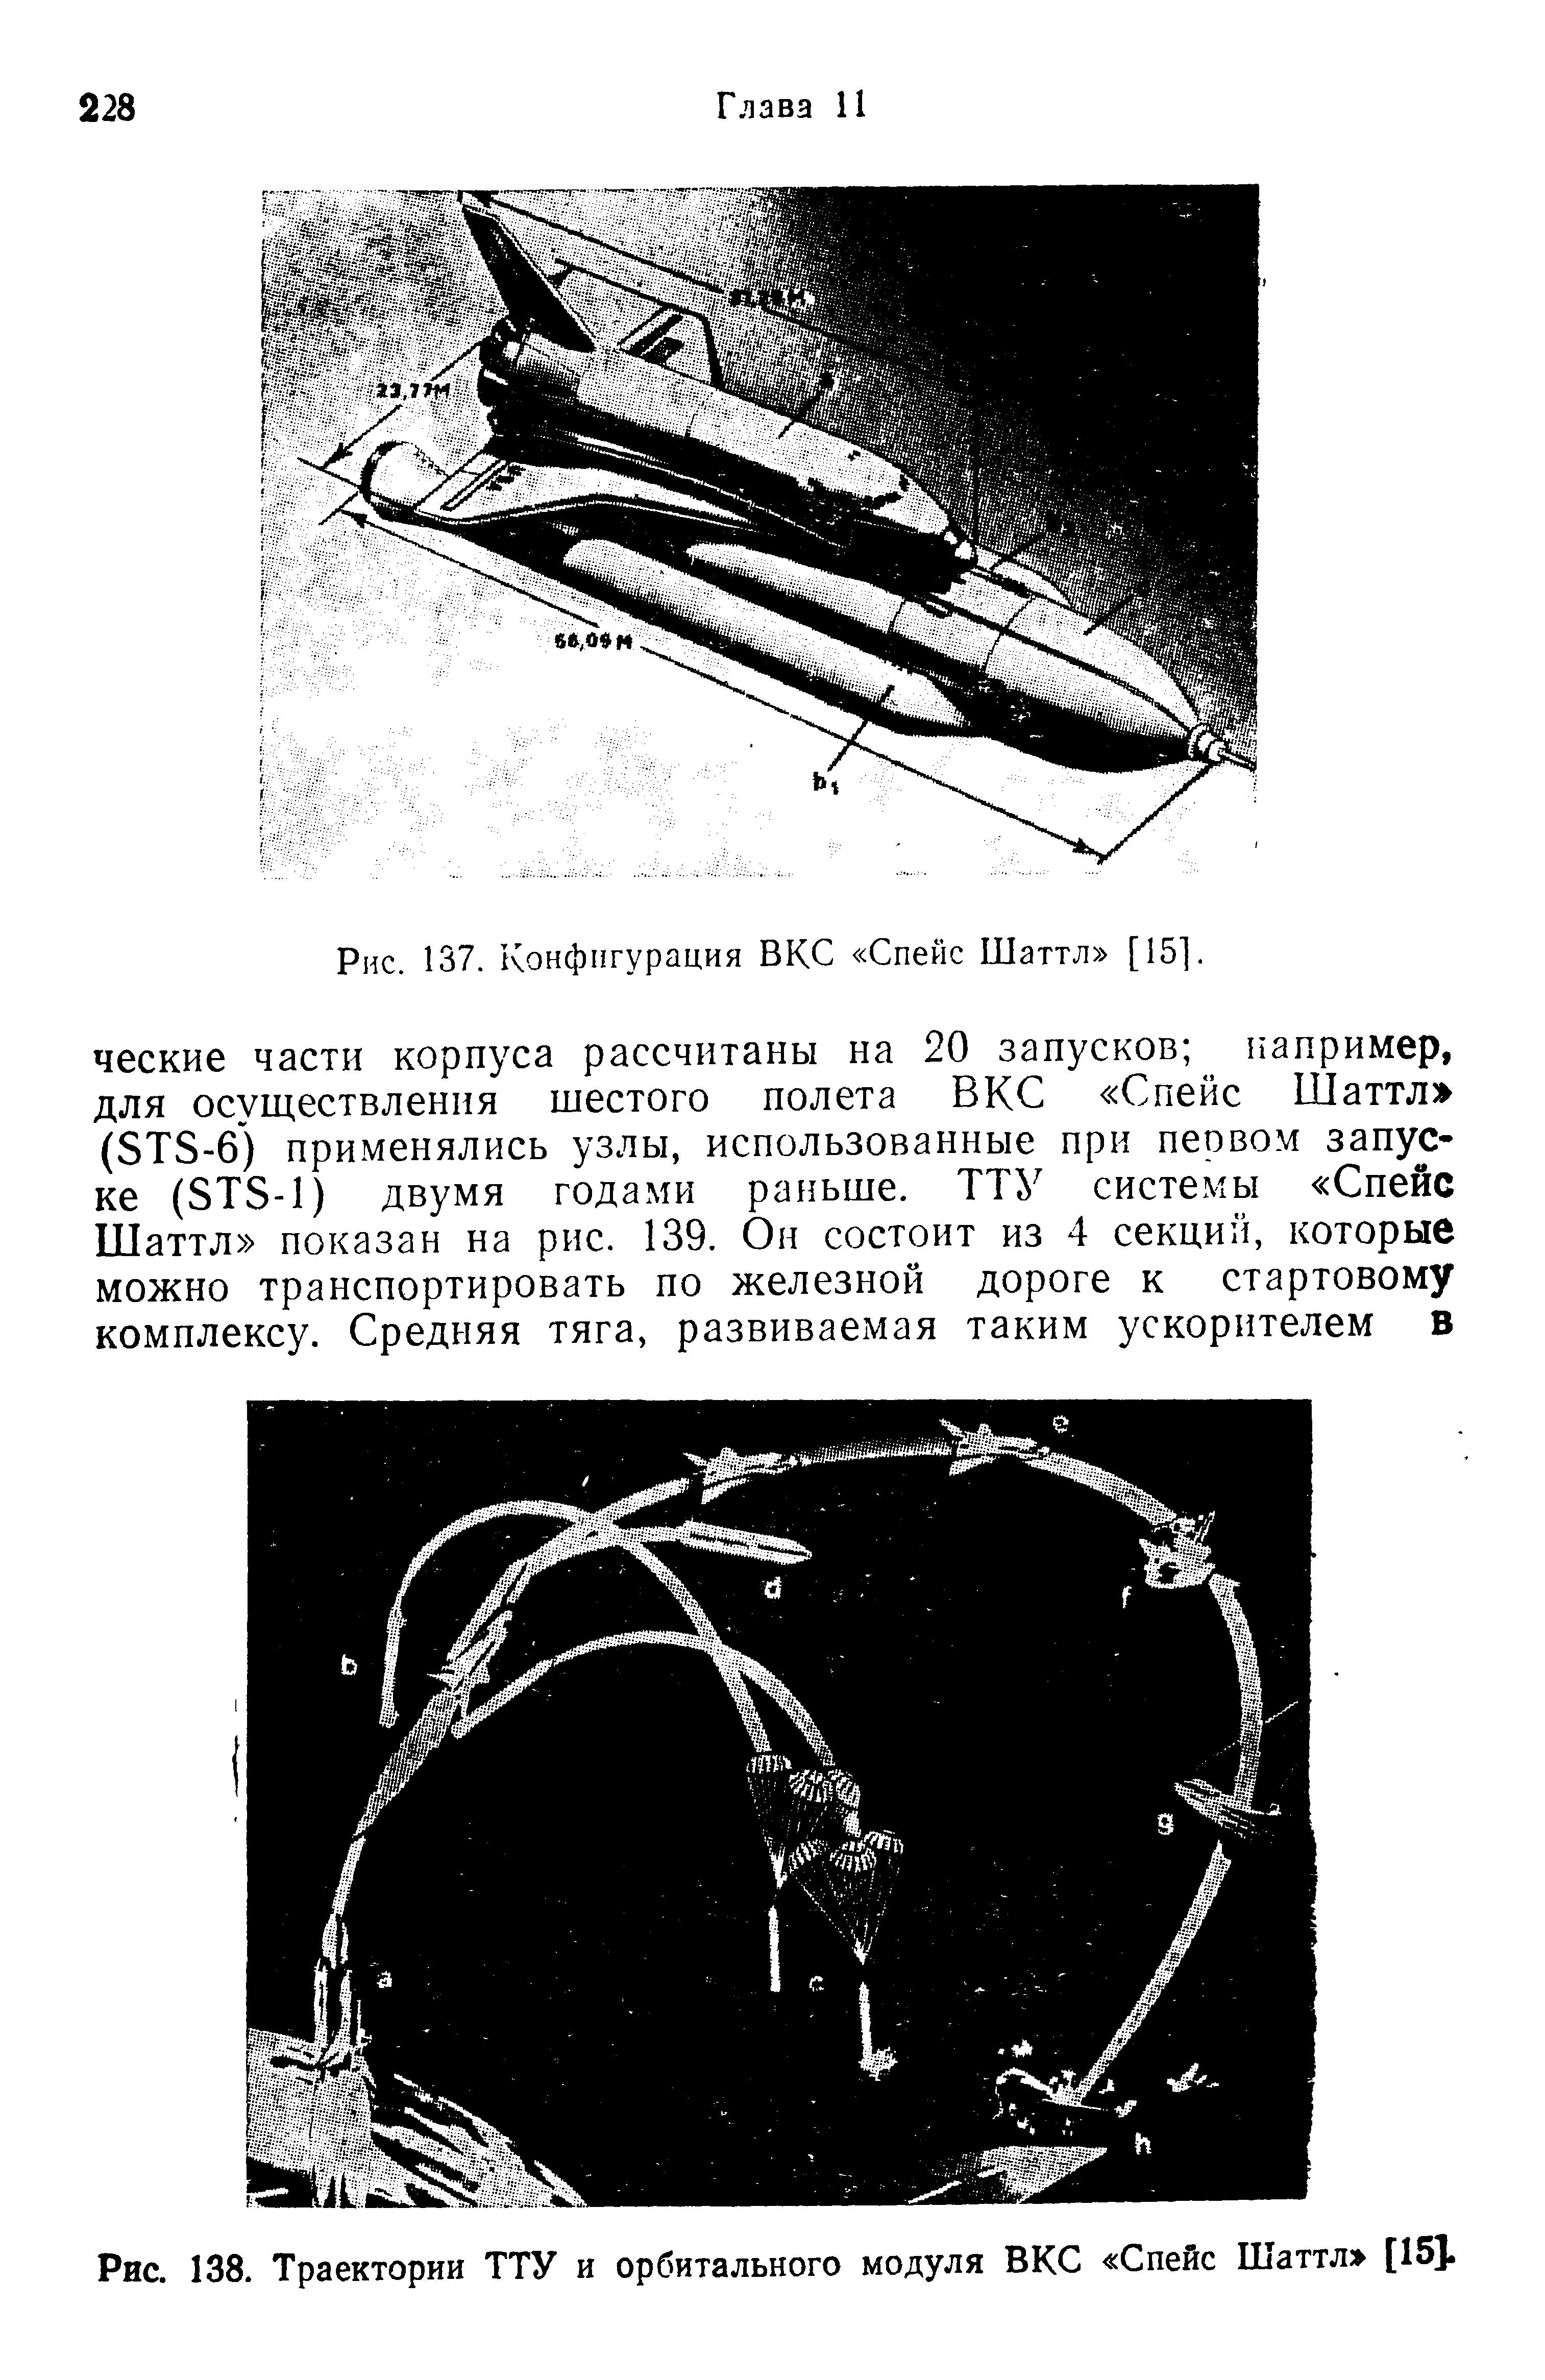 Рис. 138. Траектории ТТУ и орбитального модуля ВКС Спейс Шаттл [15].
